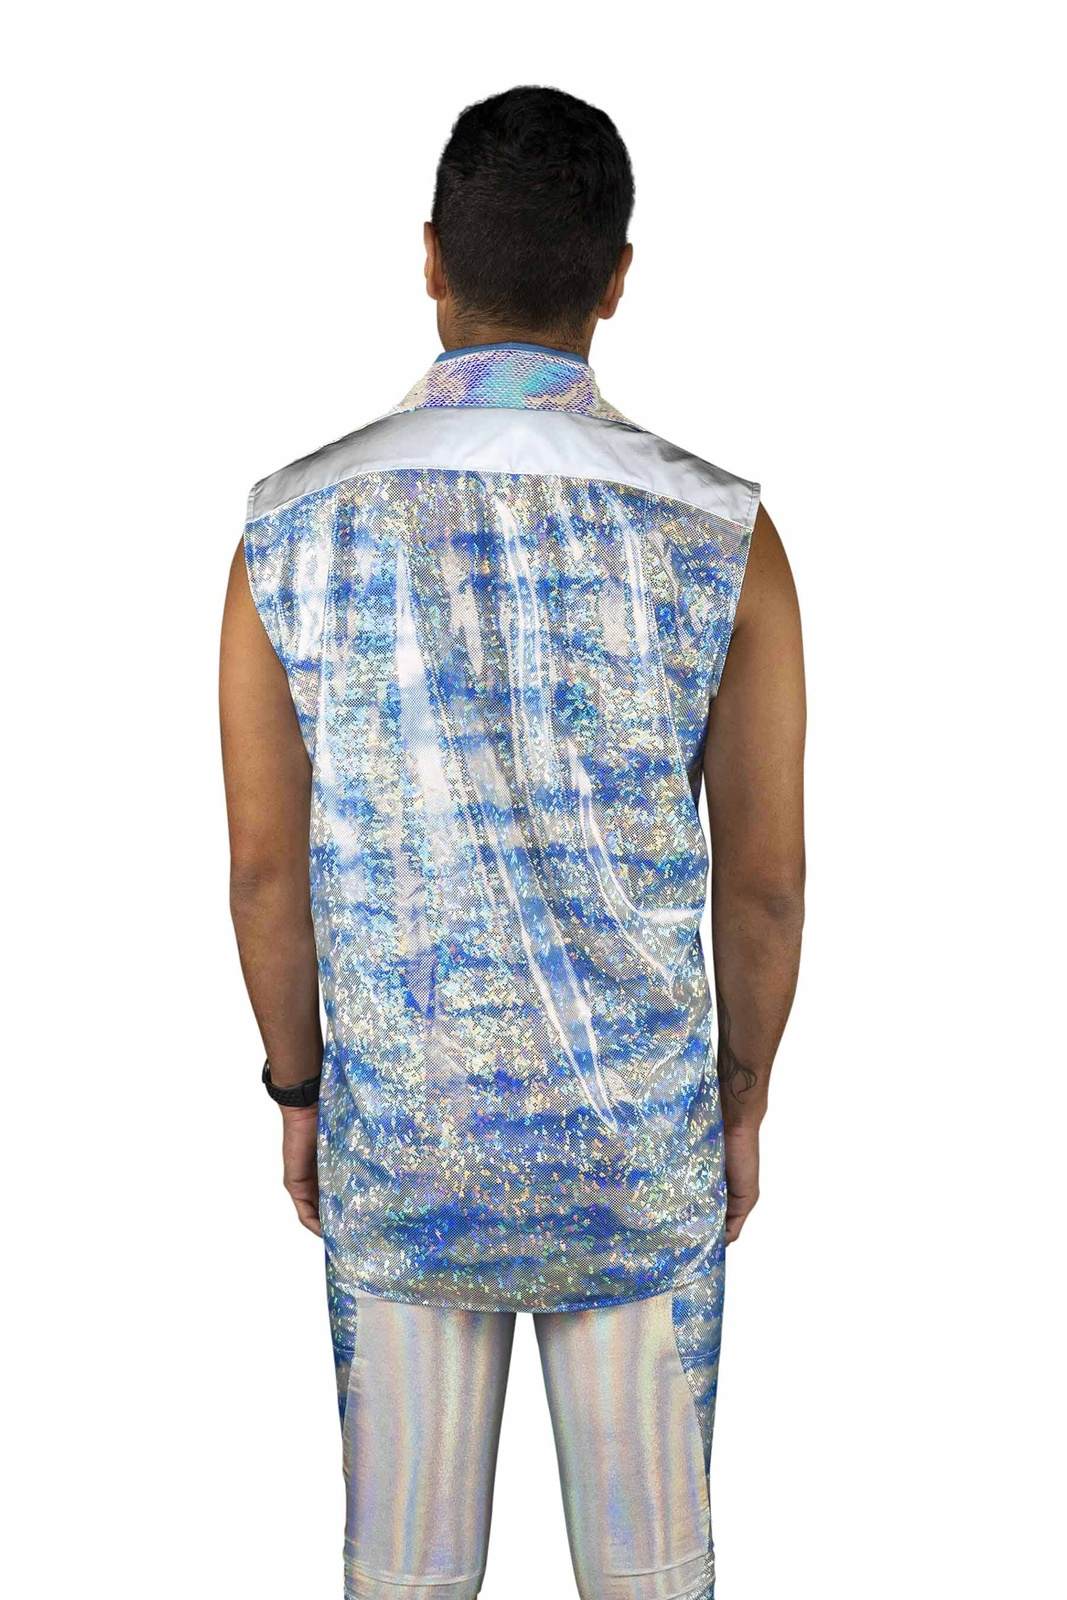 Holographic Powder Blue Ruffled Tuxedo Shirt tank top from Love Khaos Festival Clothing Brand.